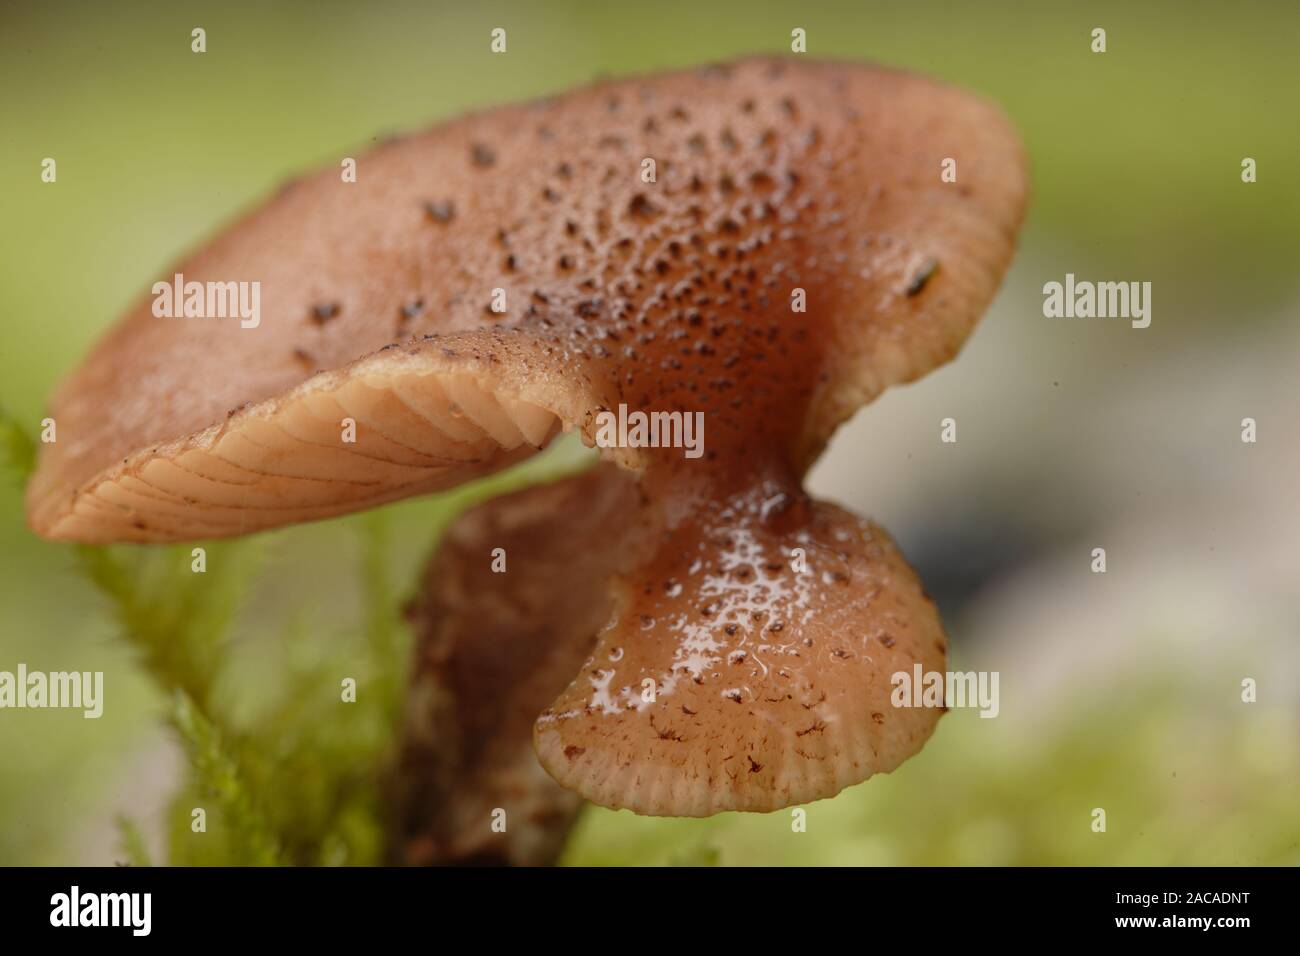 Hallimasch, Armillaria mellea, Stock Photo